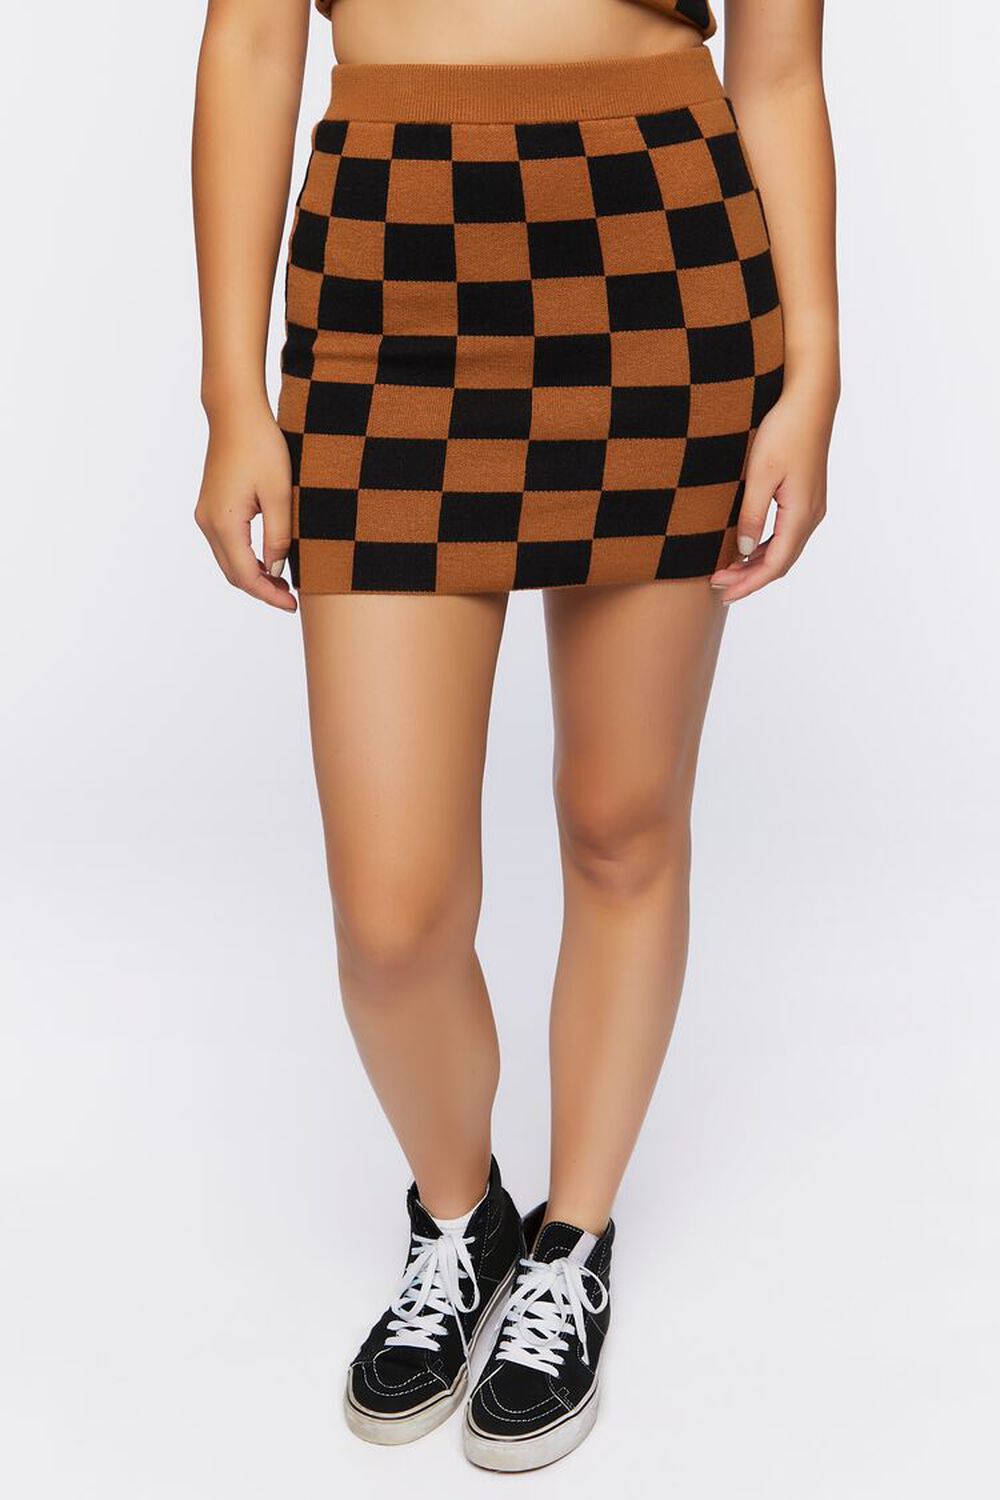 MAPLE/BLACK Checkered Sweater-Knit Mini Skirt, image 2